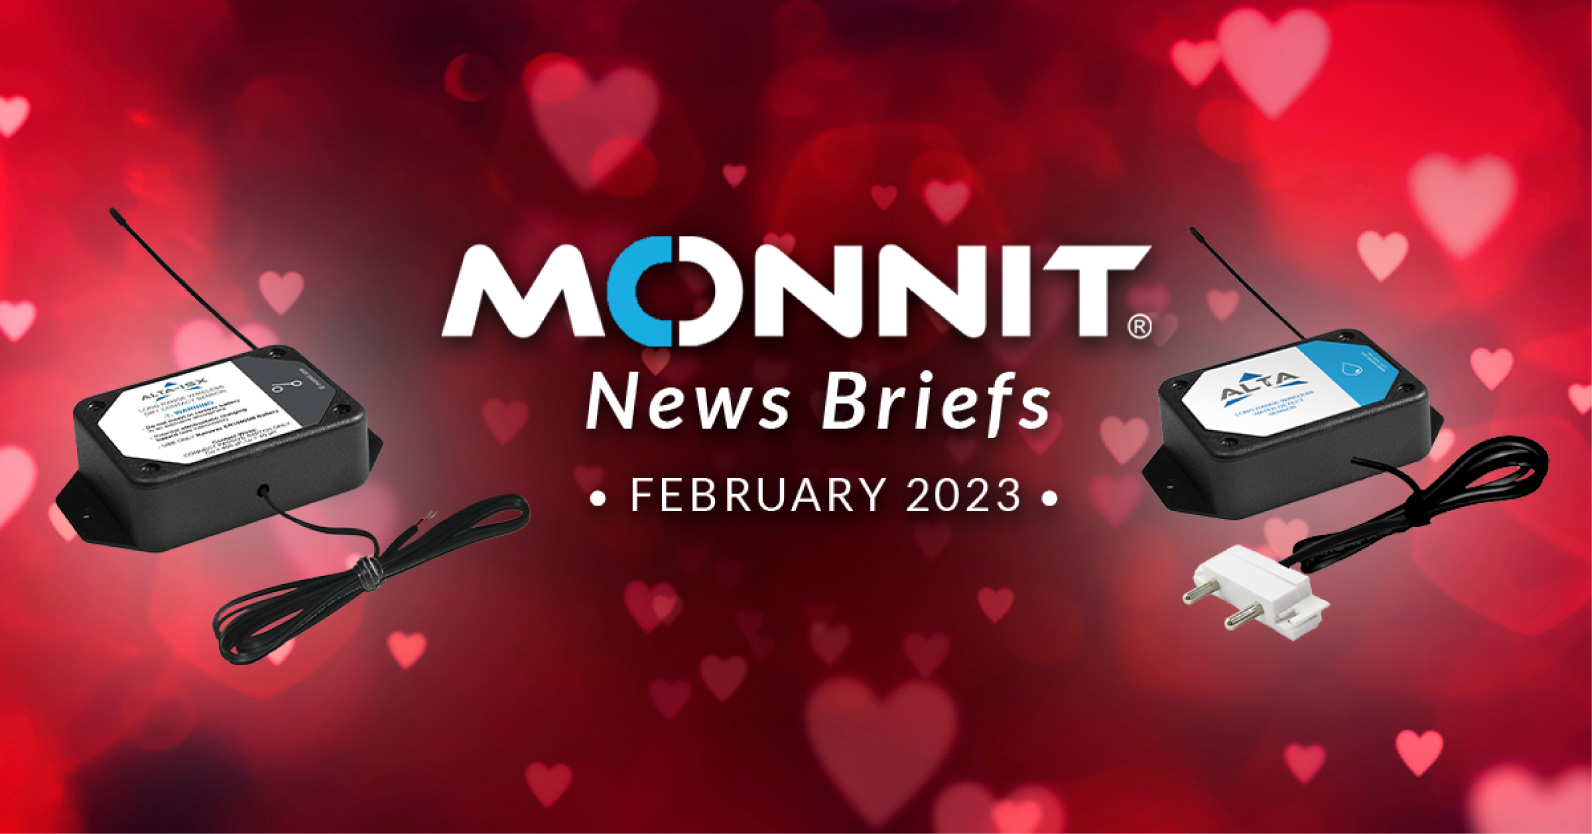 Monnit News Briefs February 2023 